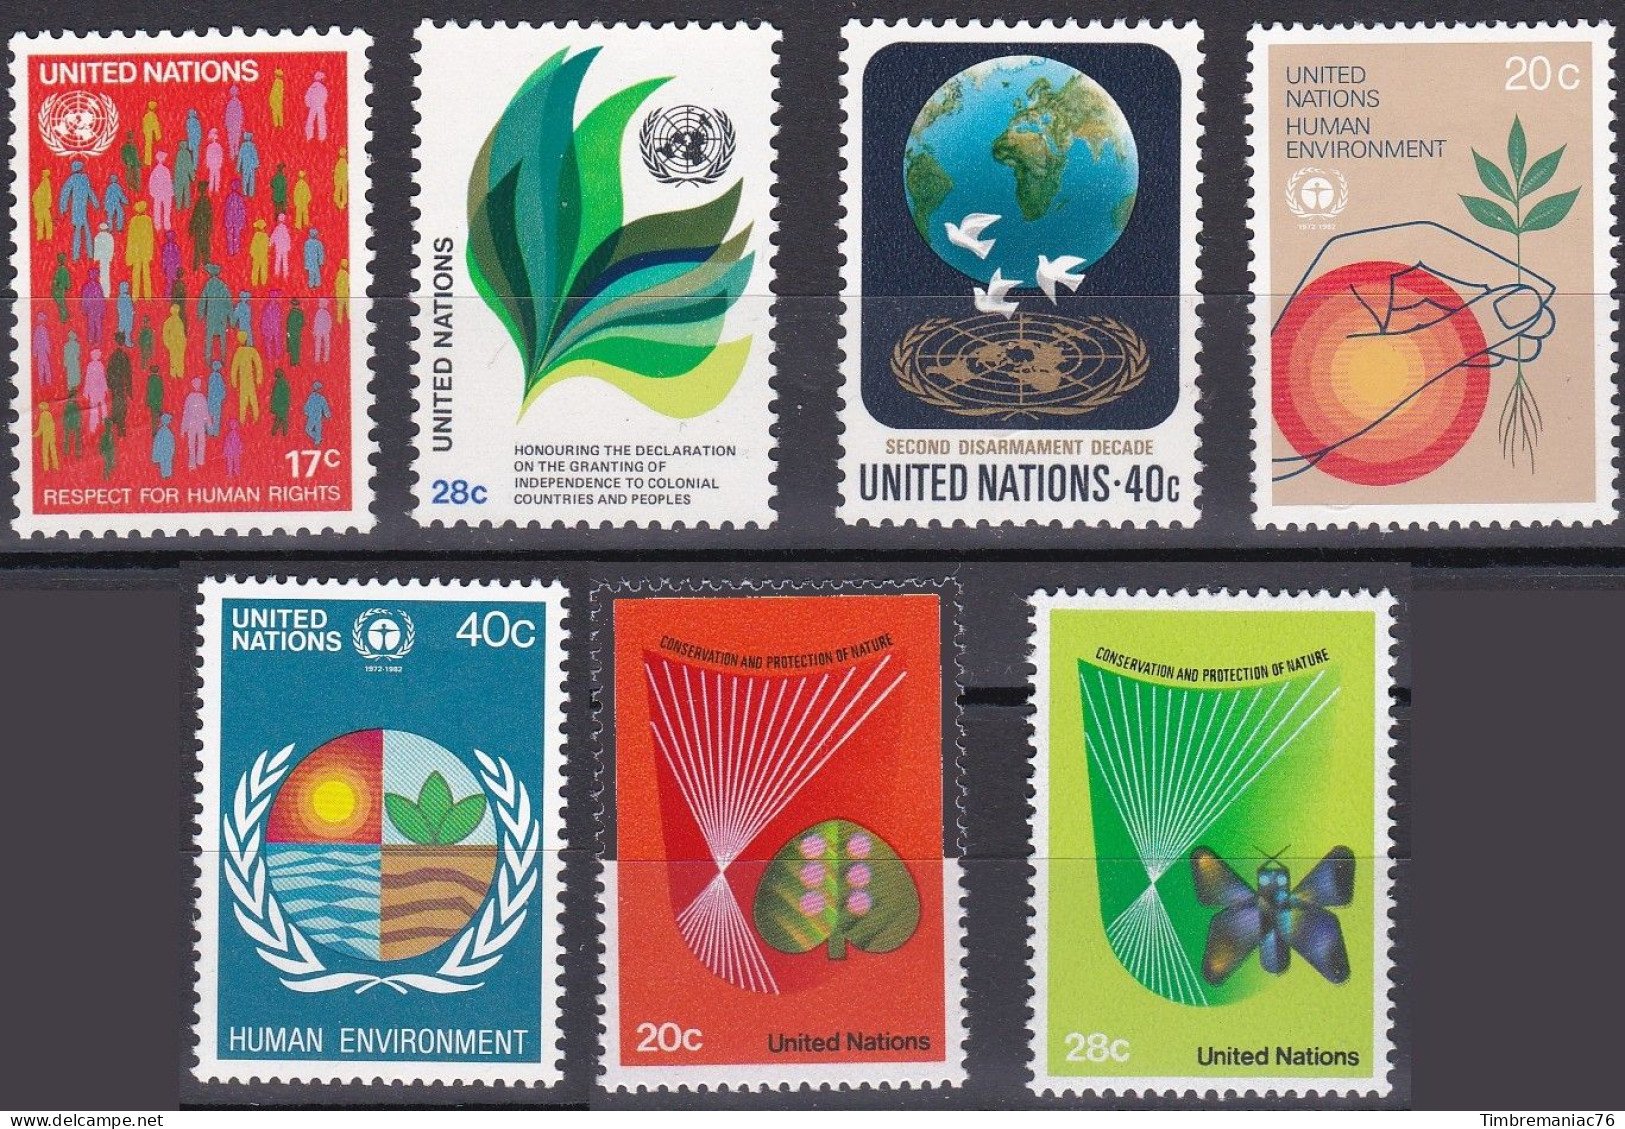 Nations Unies N.Y. 1982 YT 359 à 363 Et 381-382 Neufs - Unused Stamps